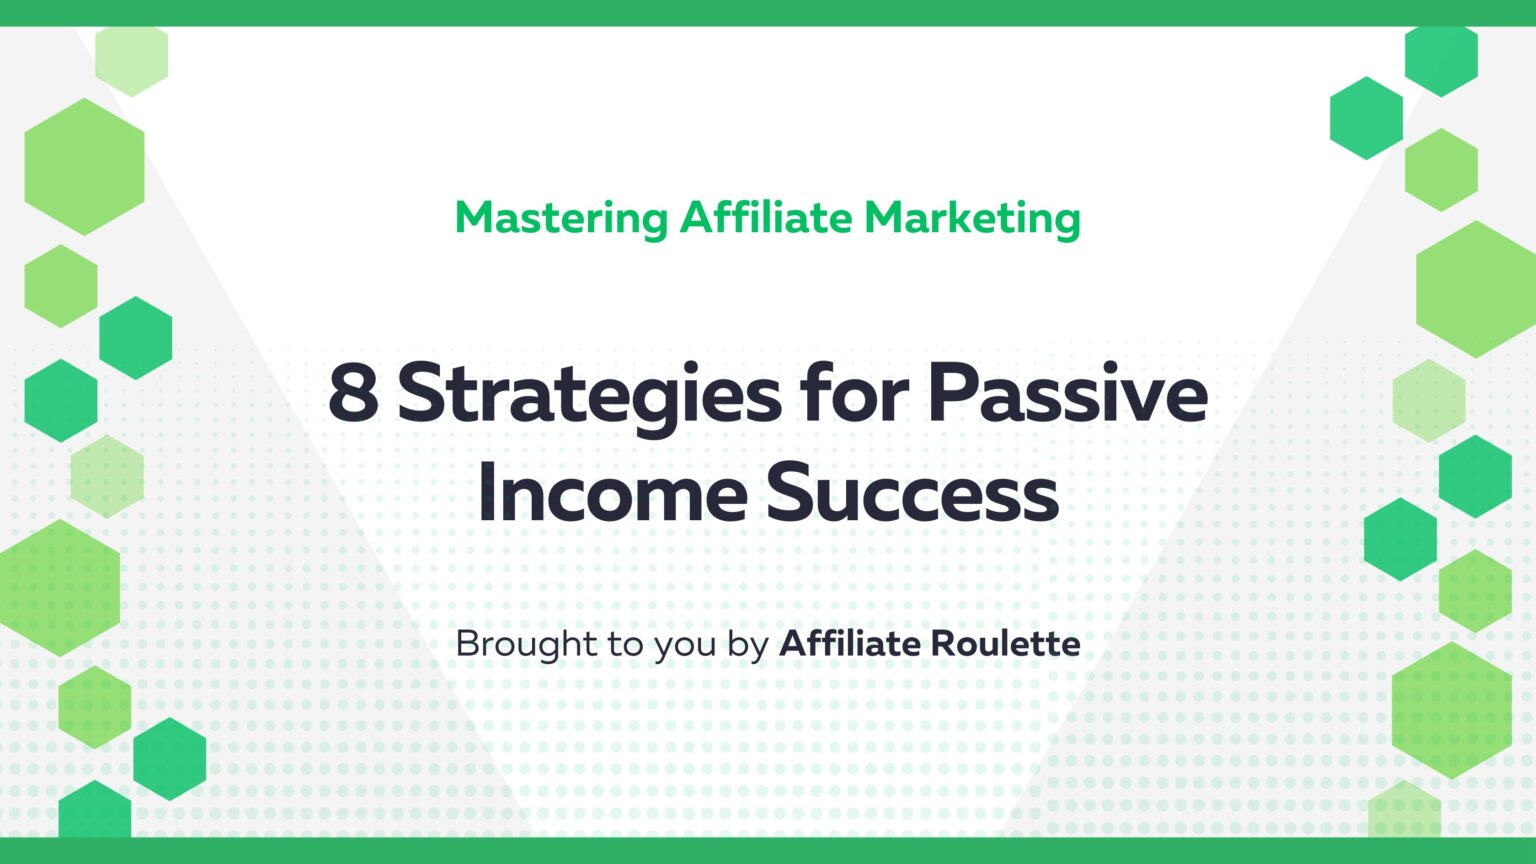 Mastering Affiliate Marketing: 8 Strategies for Passive Income Success